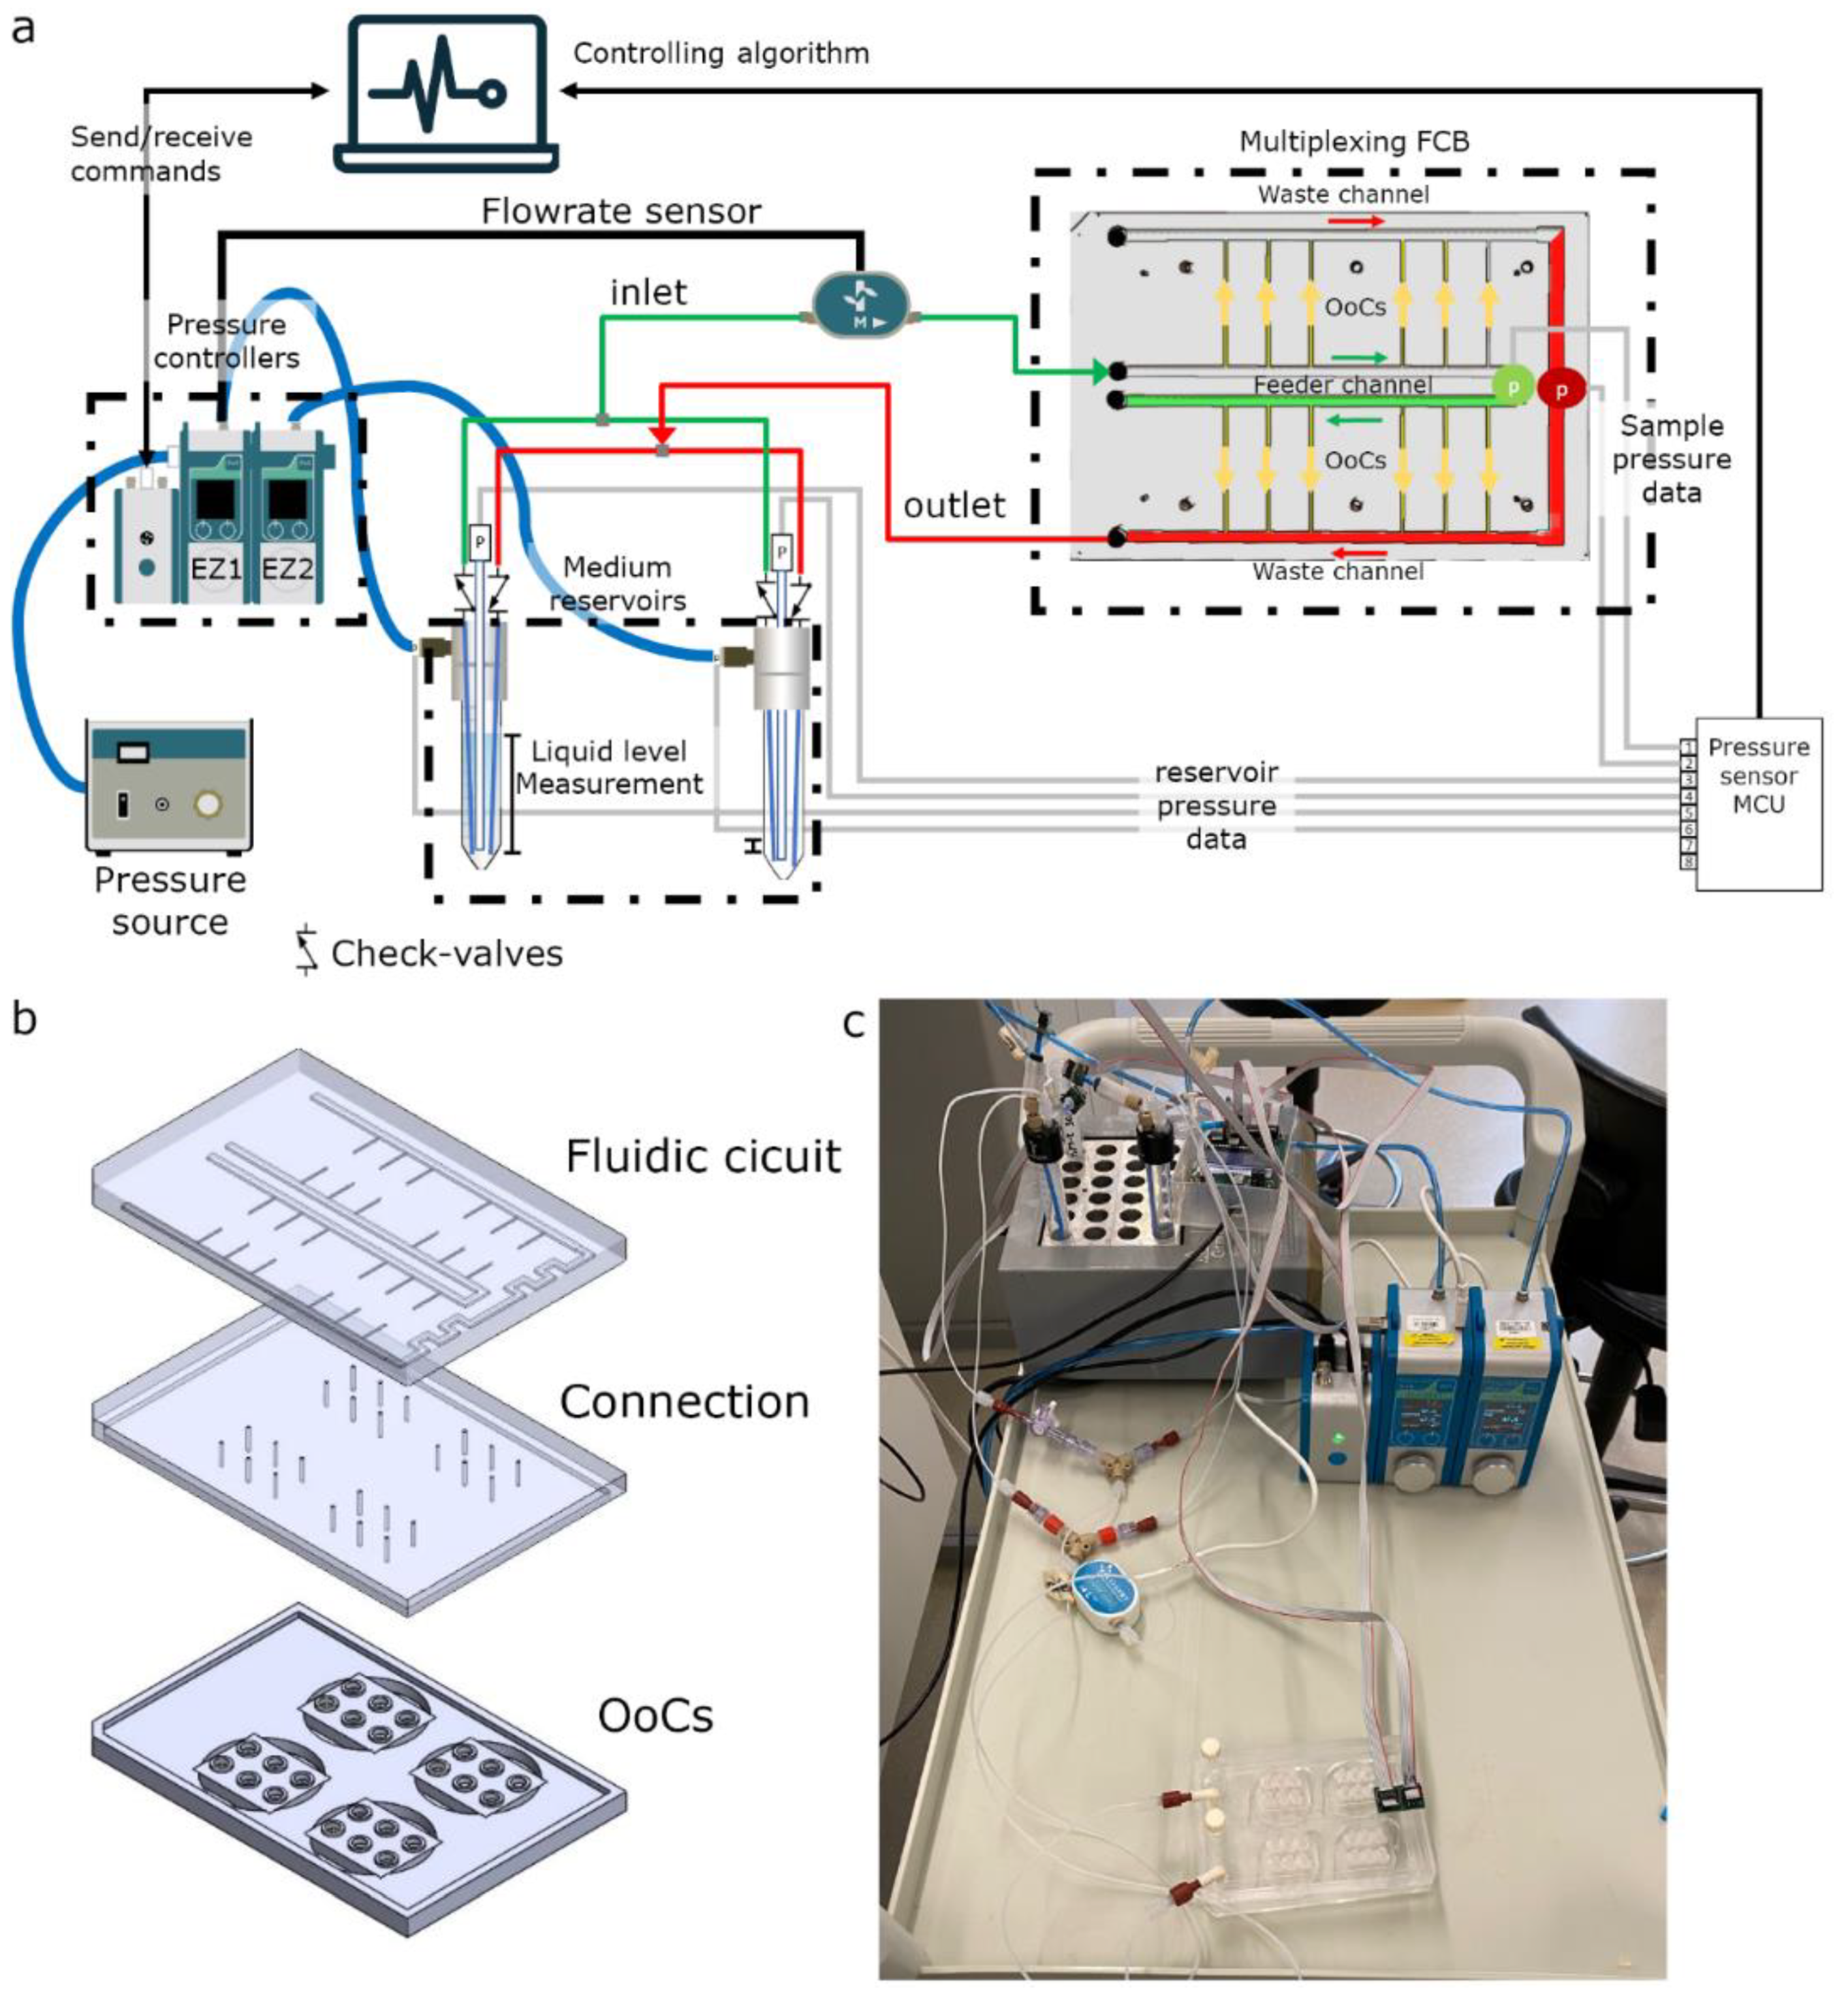 Peristaltic pump vs pressure-based microfluidic flow control